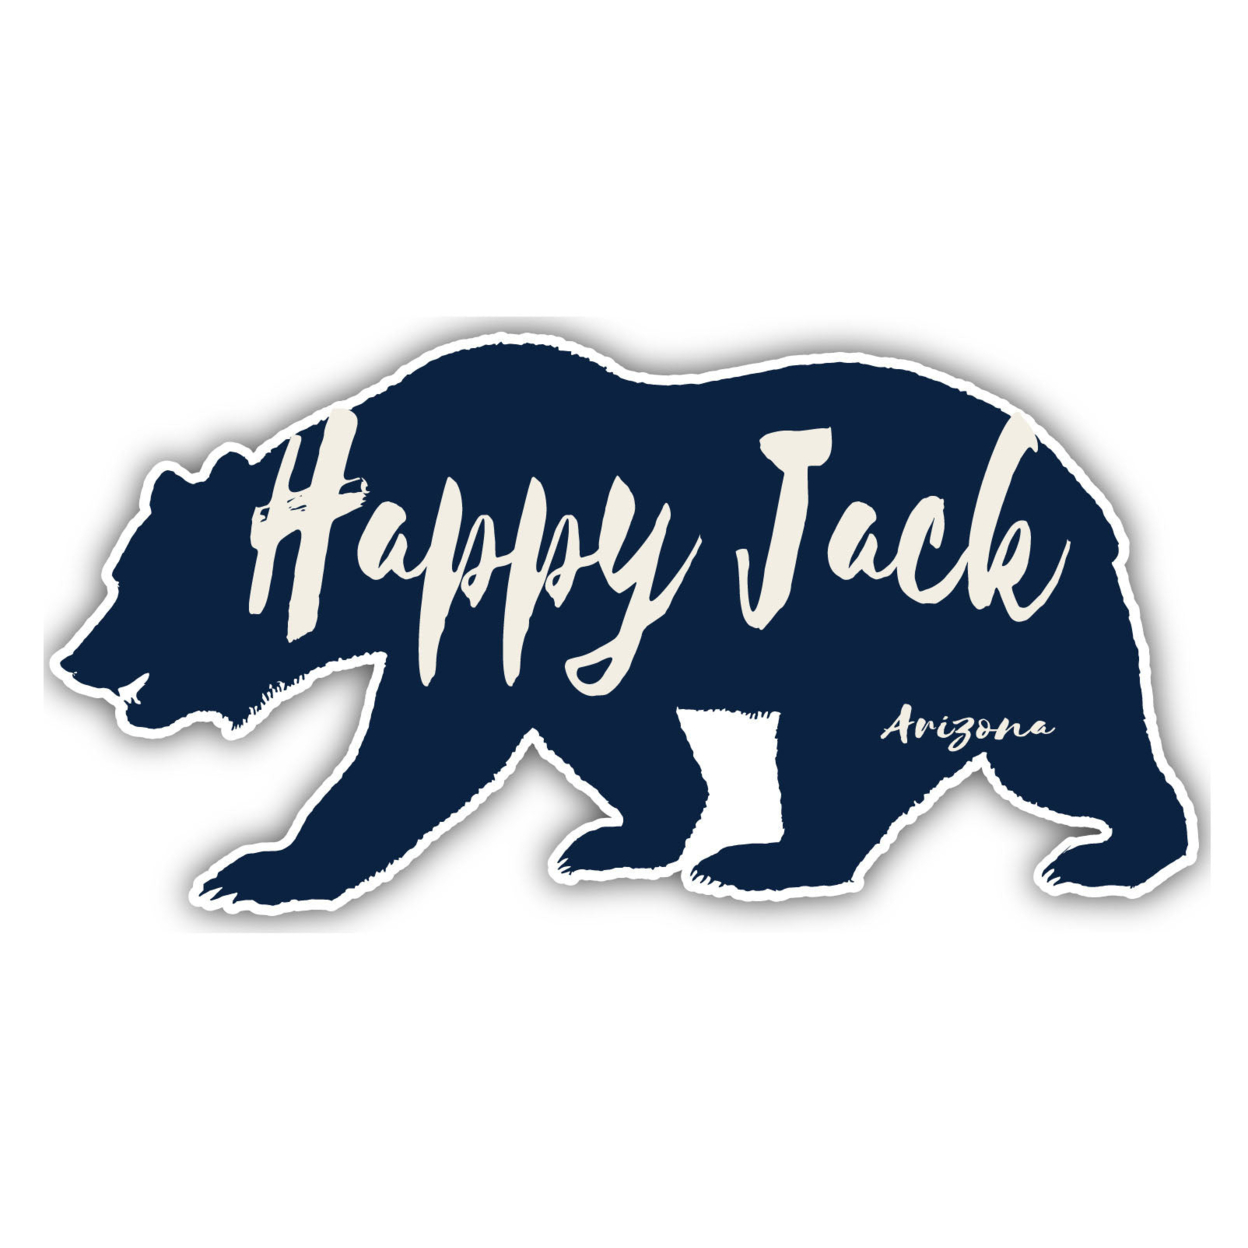 Happy Jack Arizona Souvenir Decorative Stickers (Choose Theme And Size) - 4-Pack, 4-Inch, Tent